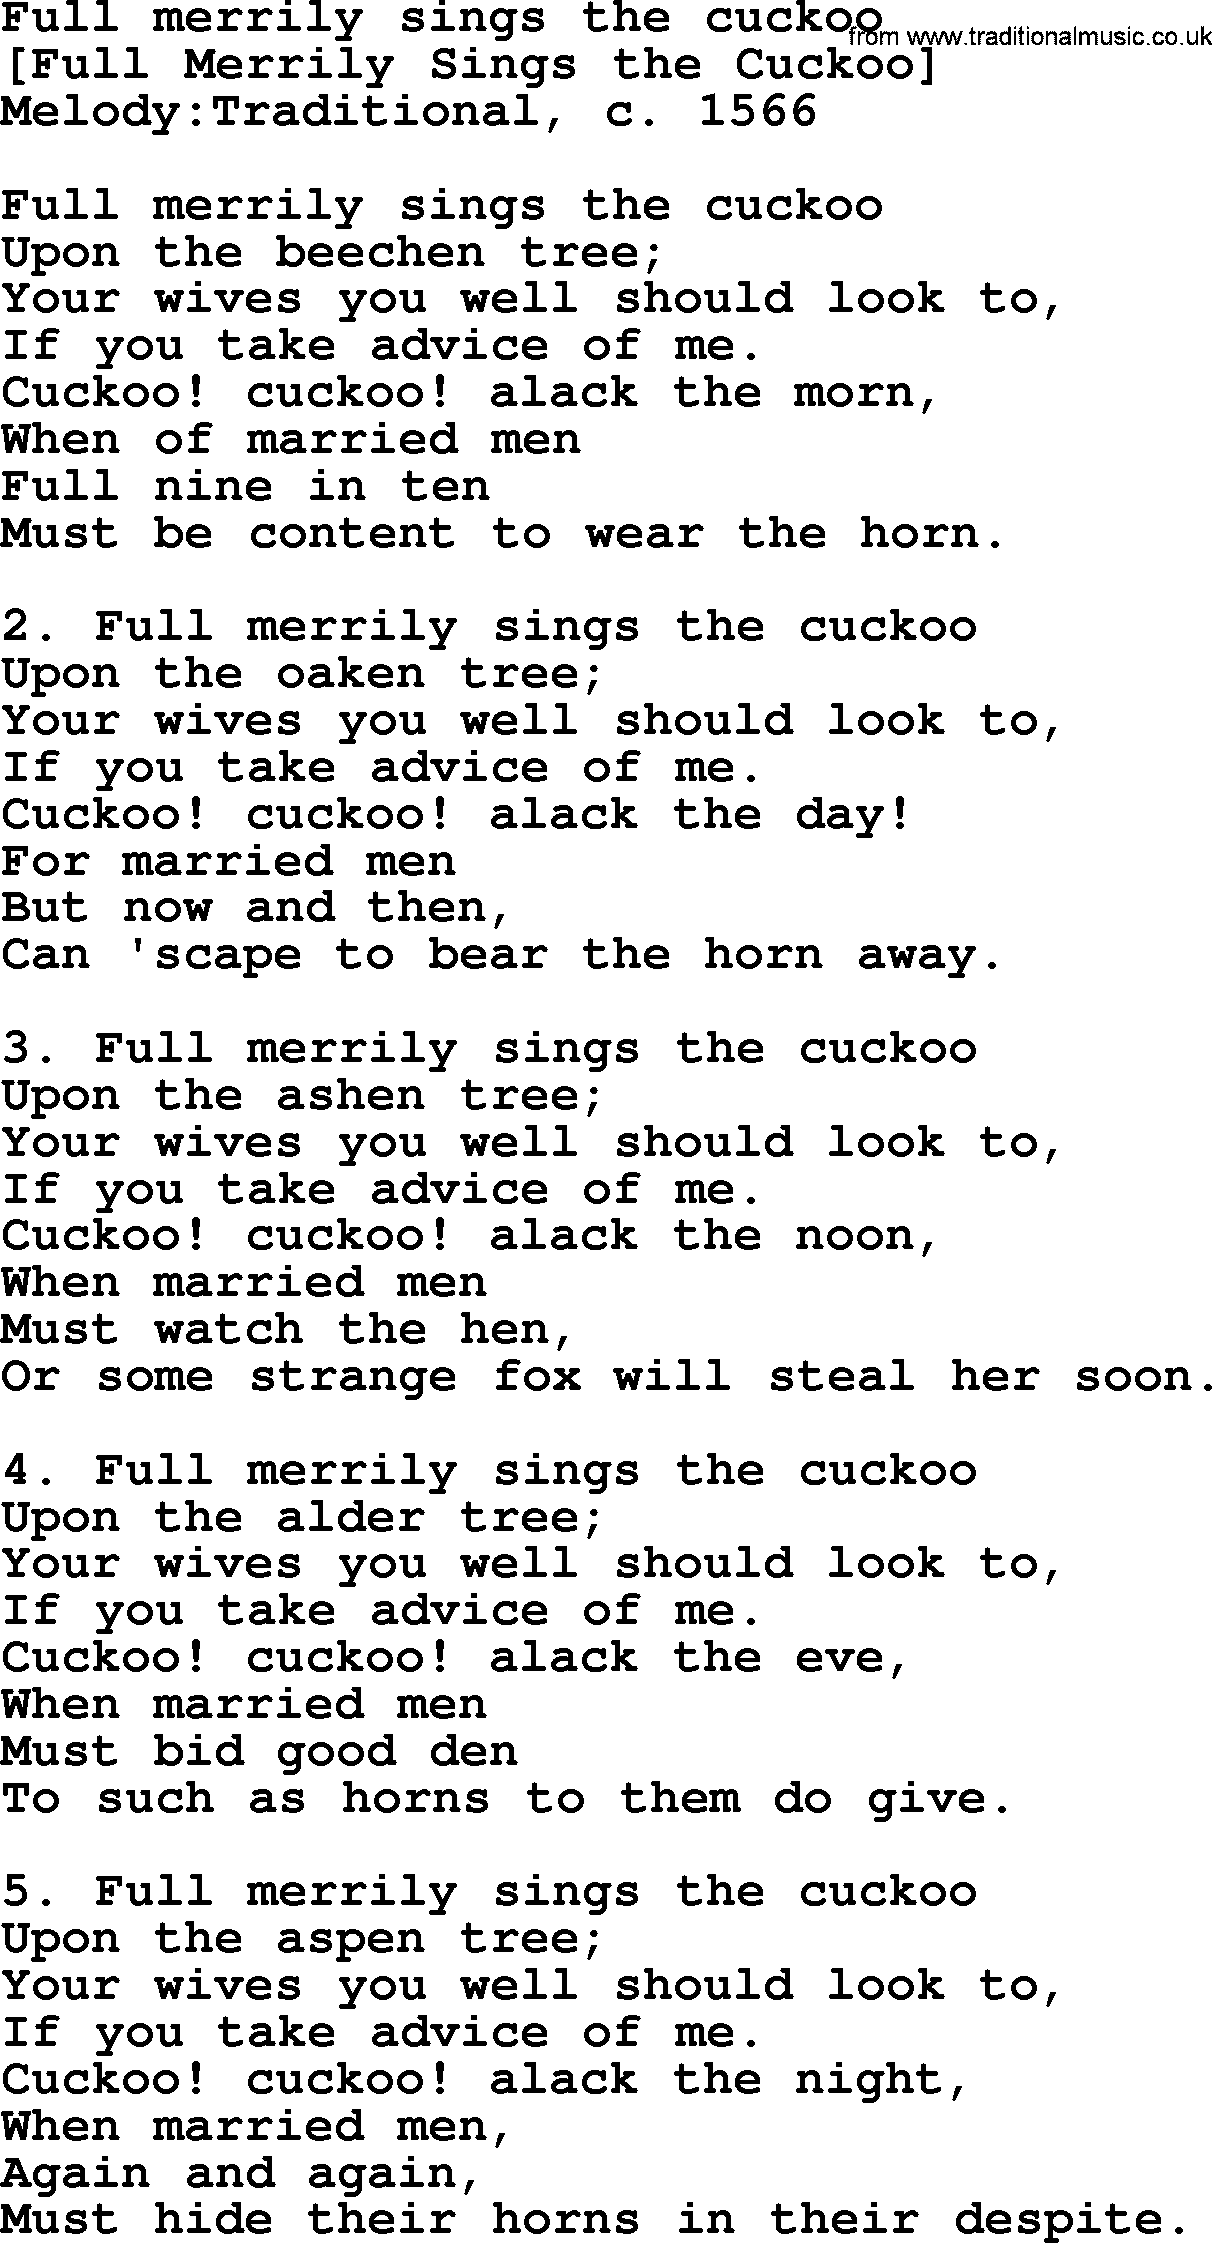 Old English Song: Full Merrily Sings The Cuckoo lyrics